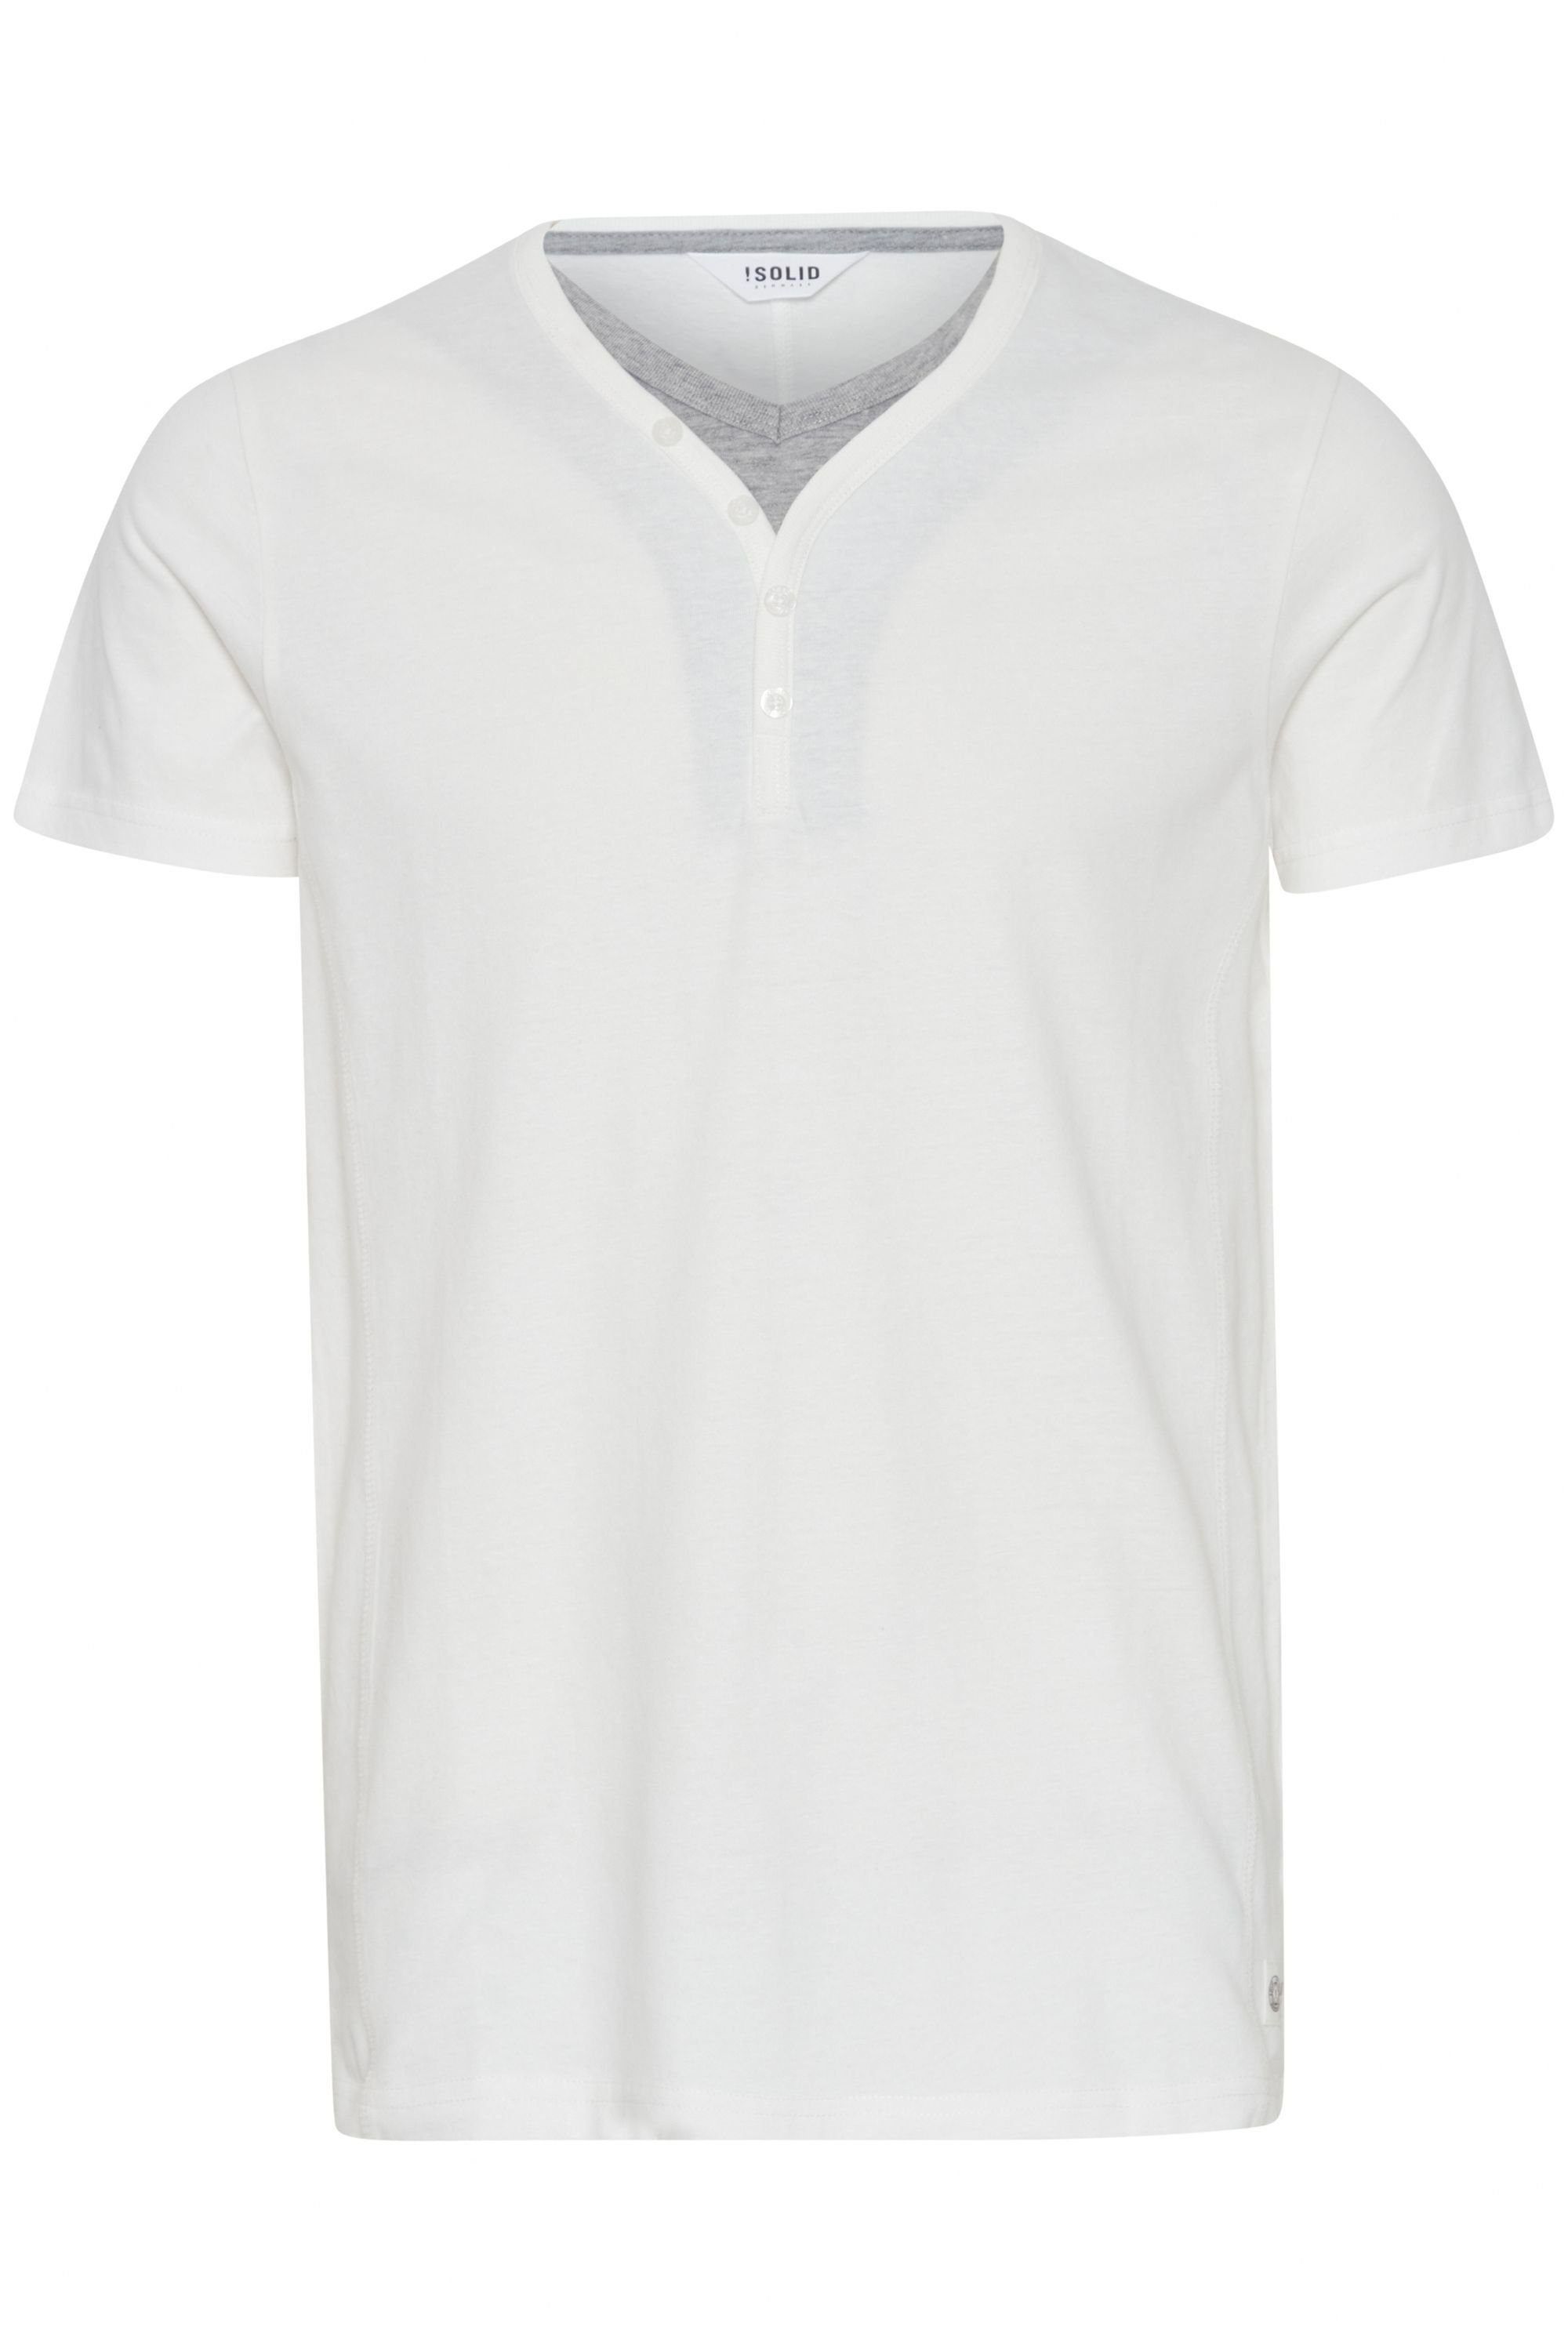 !Solid Layershirt SDDorian Kurzarmshirt im 2-in-1 Look Med Grey M (8254)